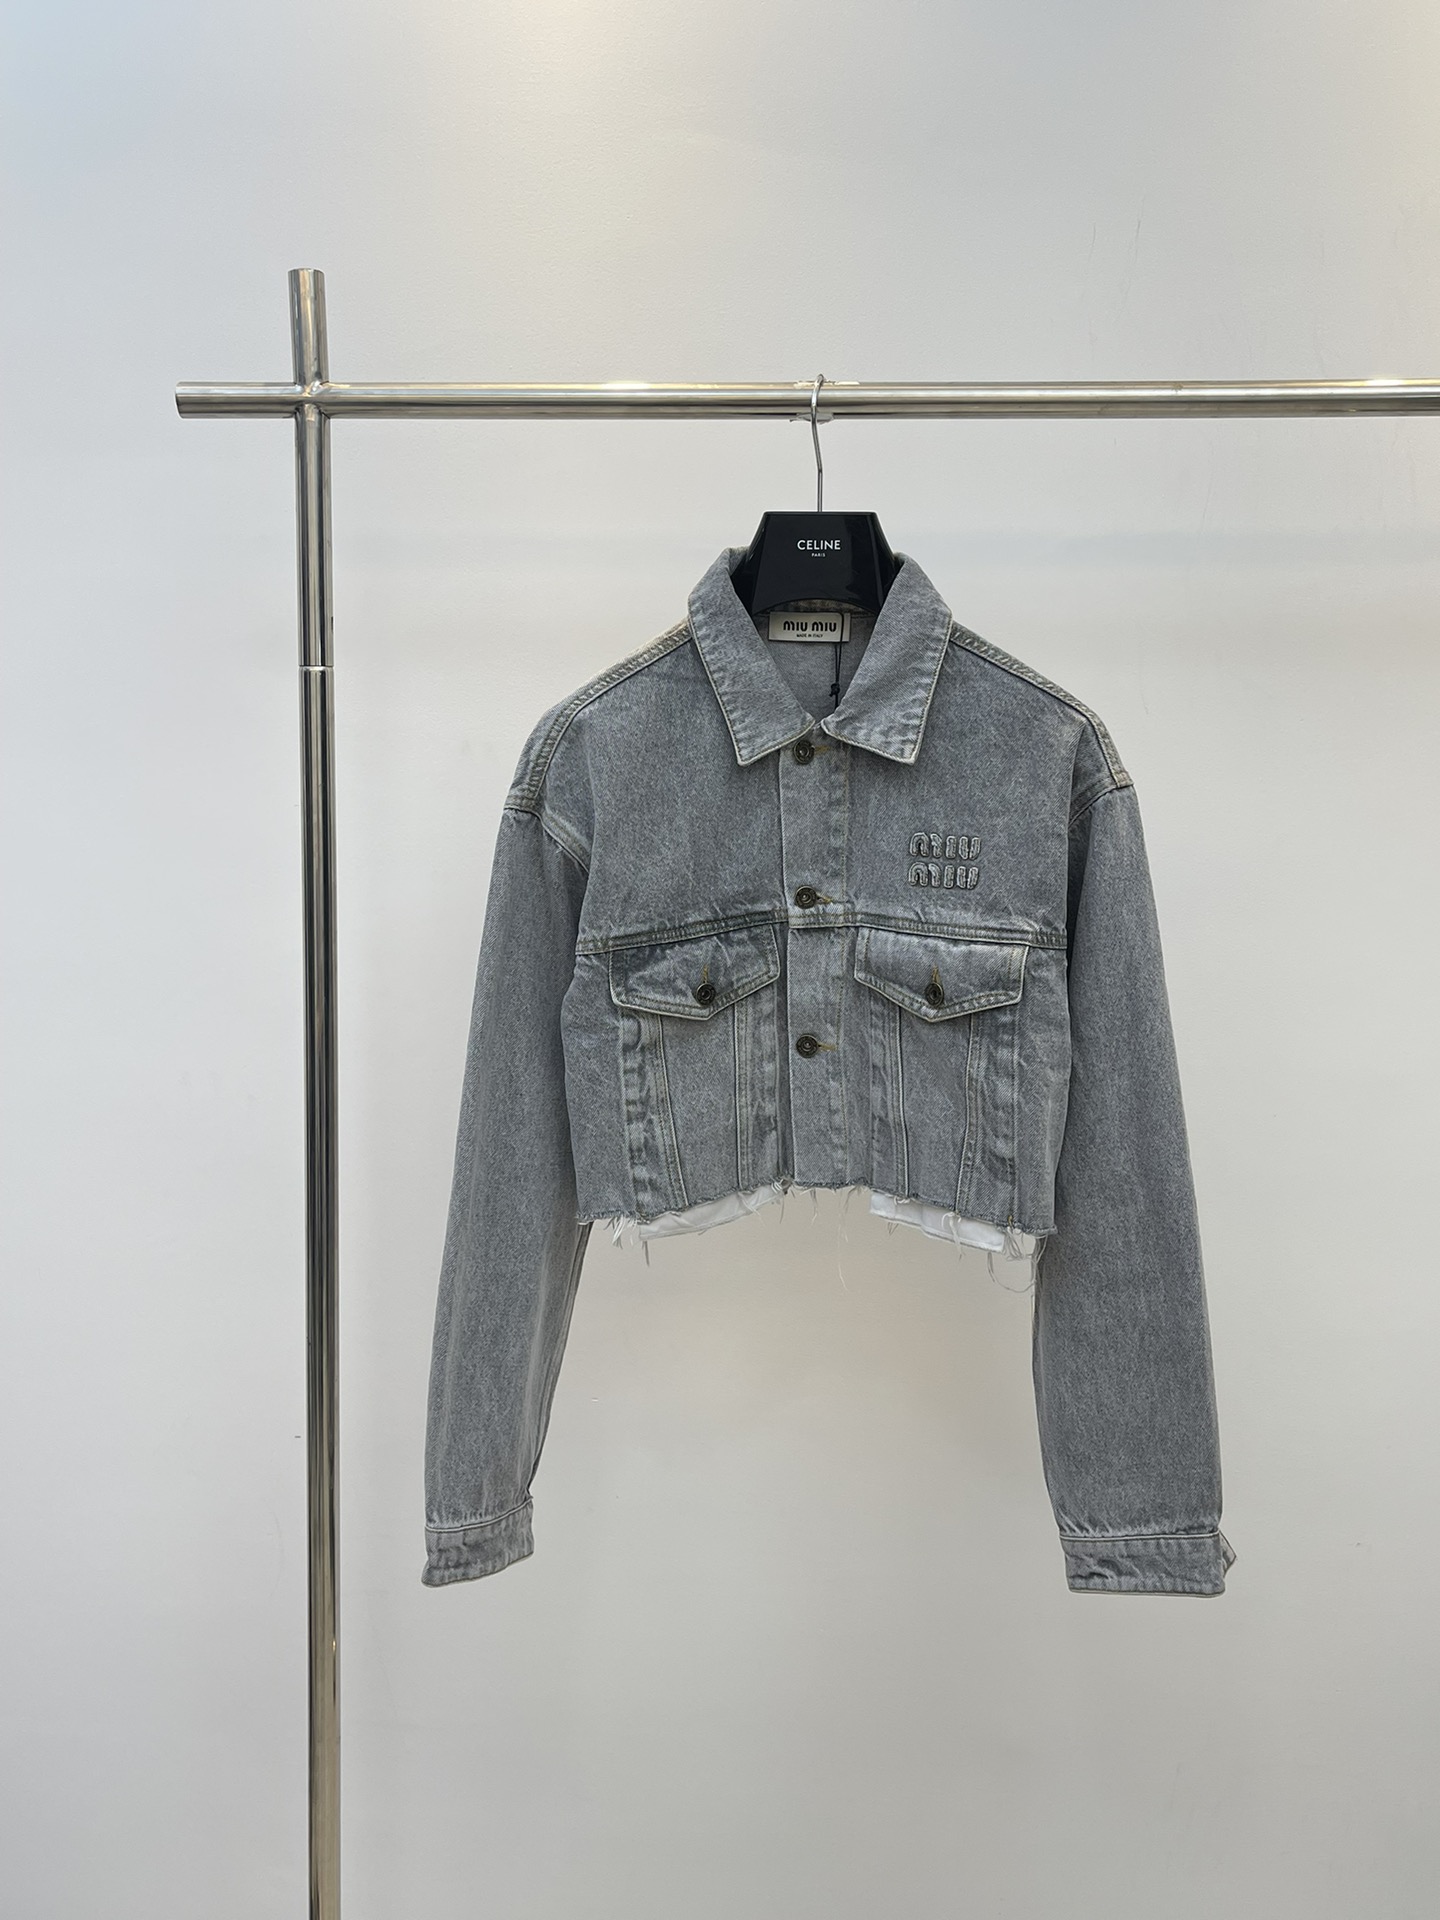 MiuMiu Clothing Coats & Jackets Grey Cotton Fall Collection Vintage